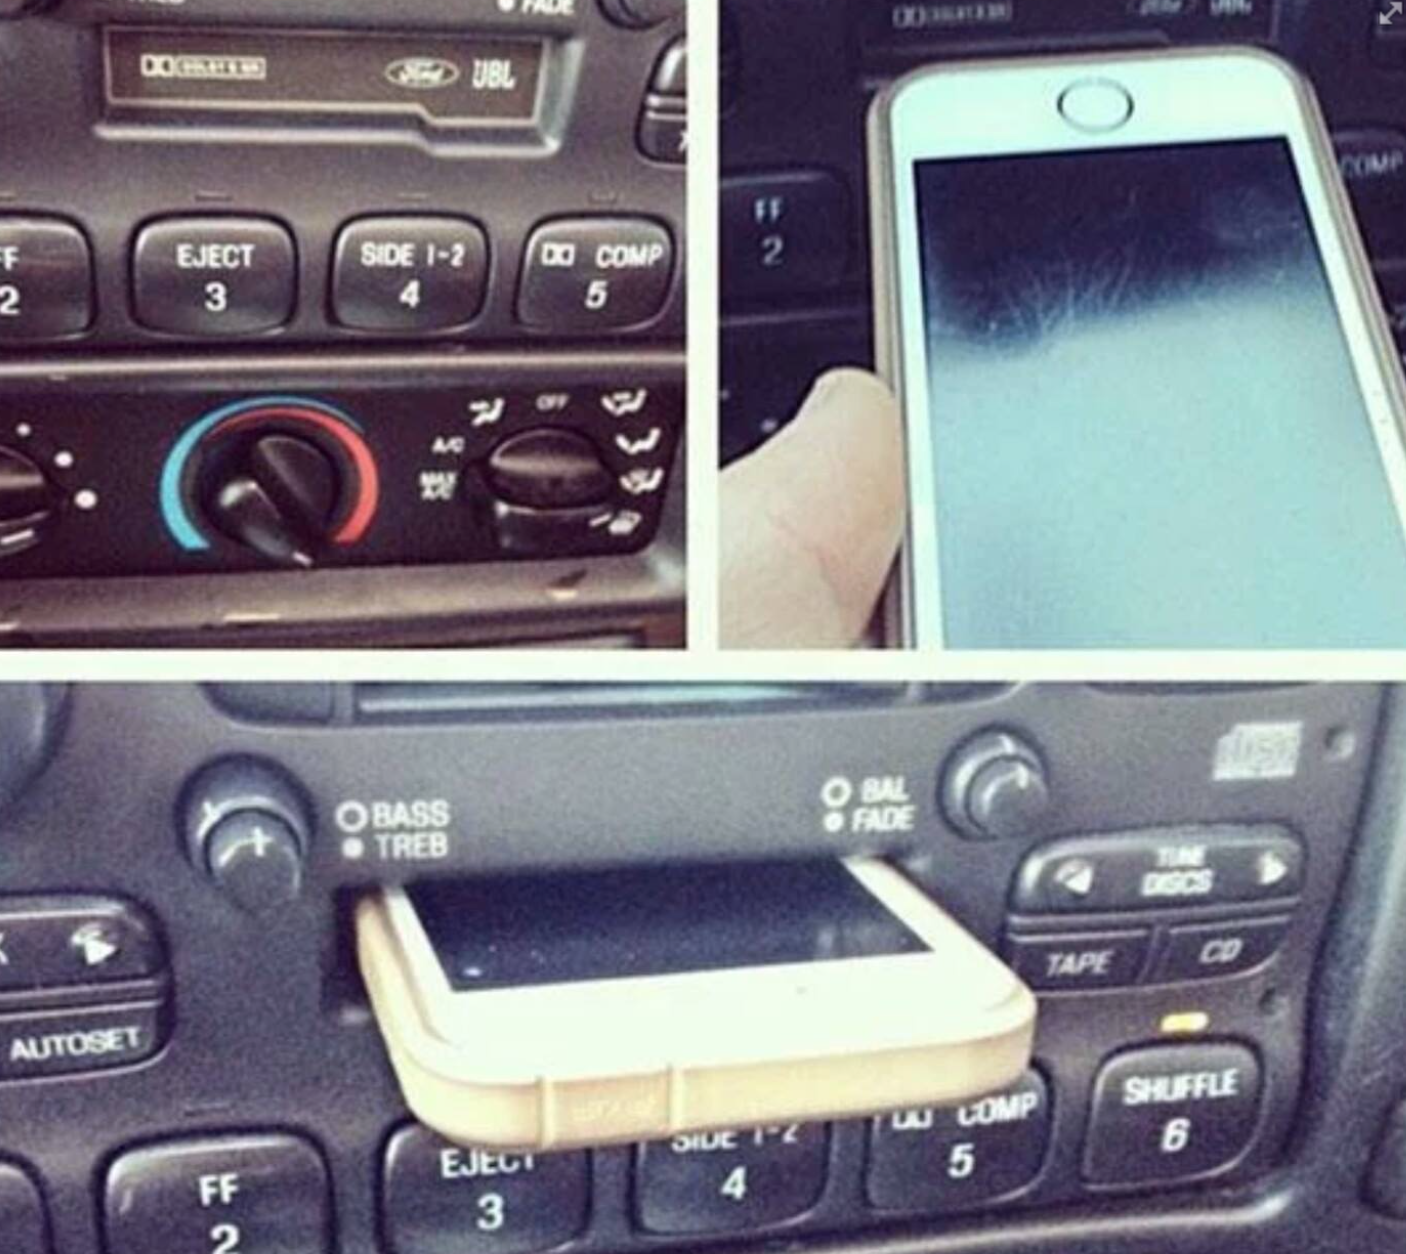 B iPhone in cassette slot